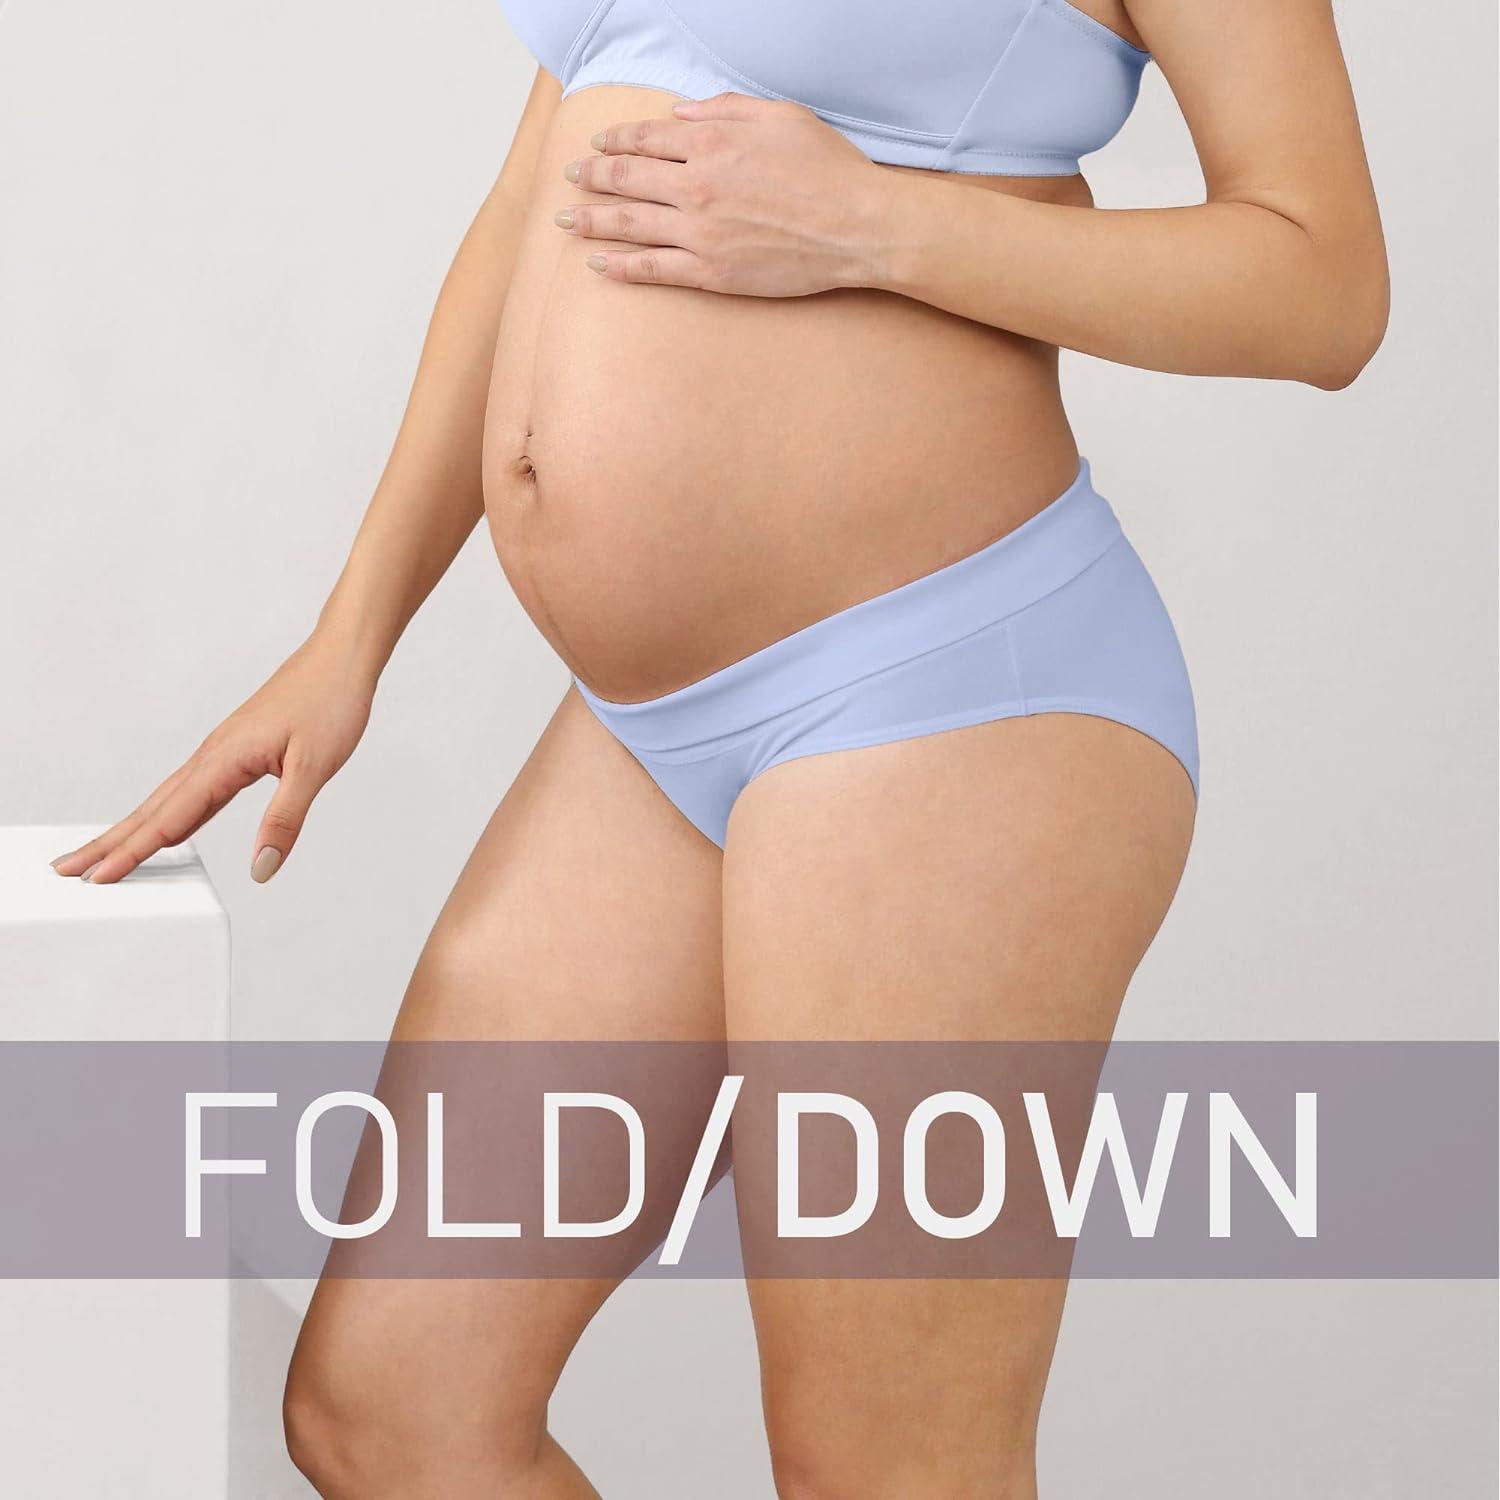 Intimate Portal Maternity Knickers, Pregnancy Pants Postpartum Underwear